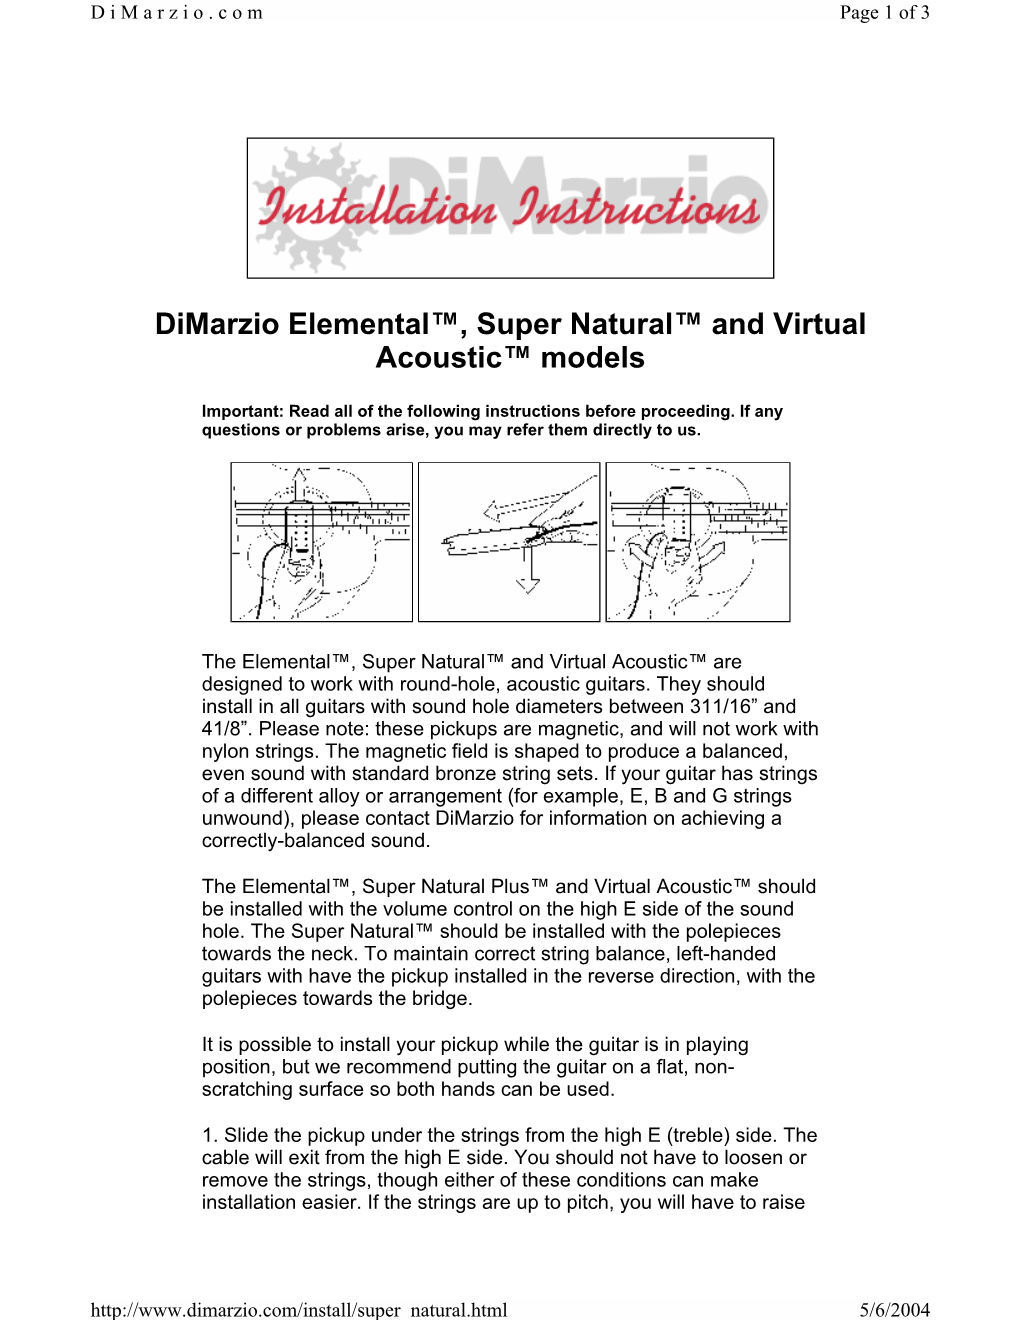 Dimarzio Elemental™, Super Natural™ and Virtual Acoustic™ Models